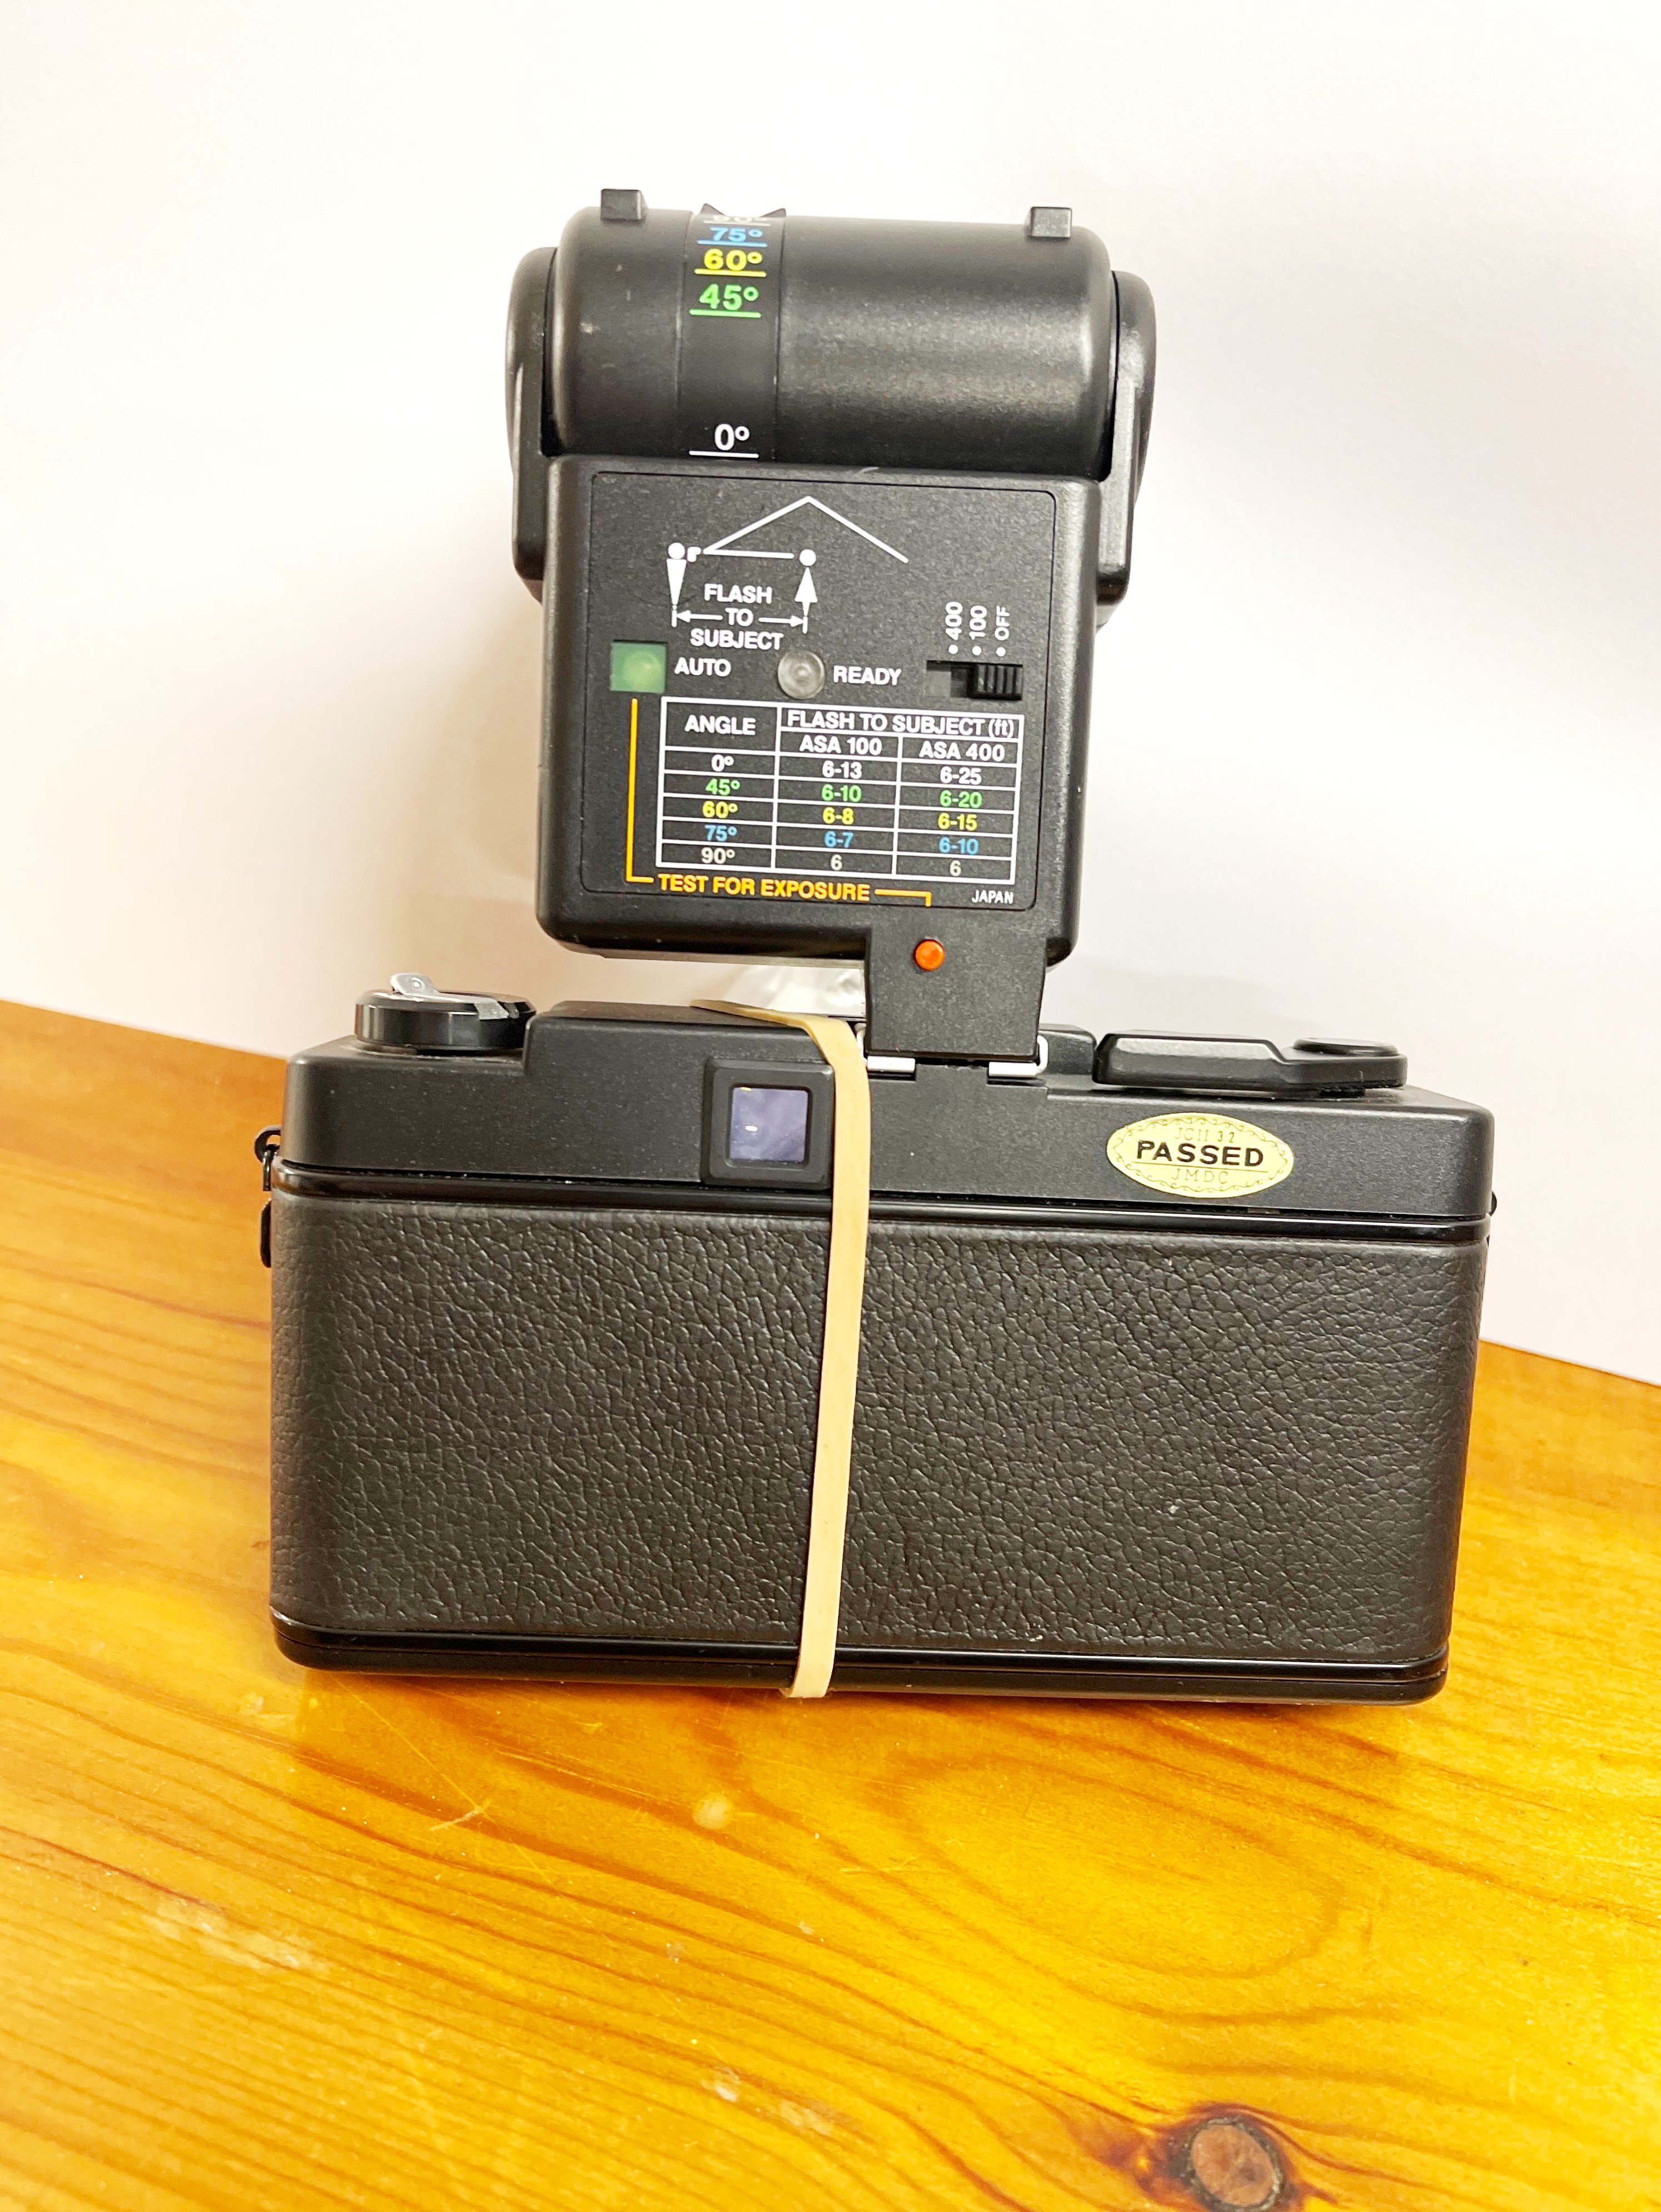 A rare Nimslo quadra lens 30mm camera and flash. - Image 2 of 2